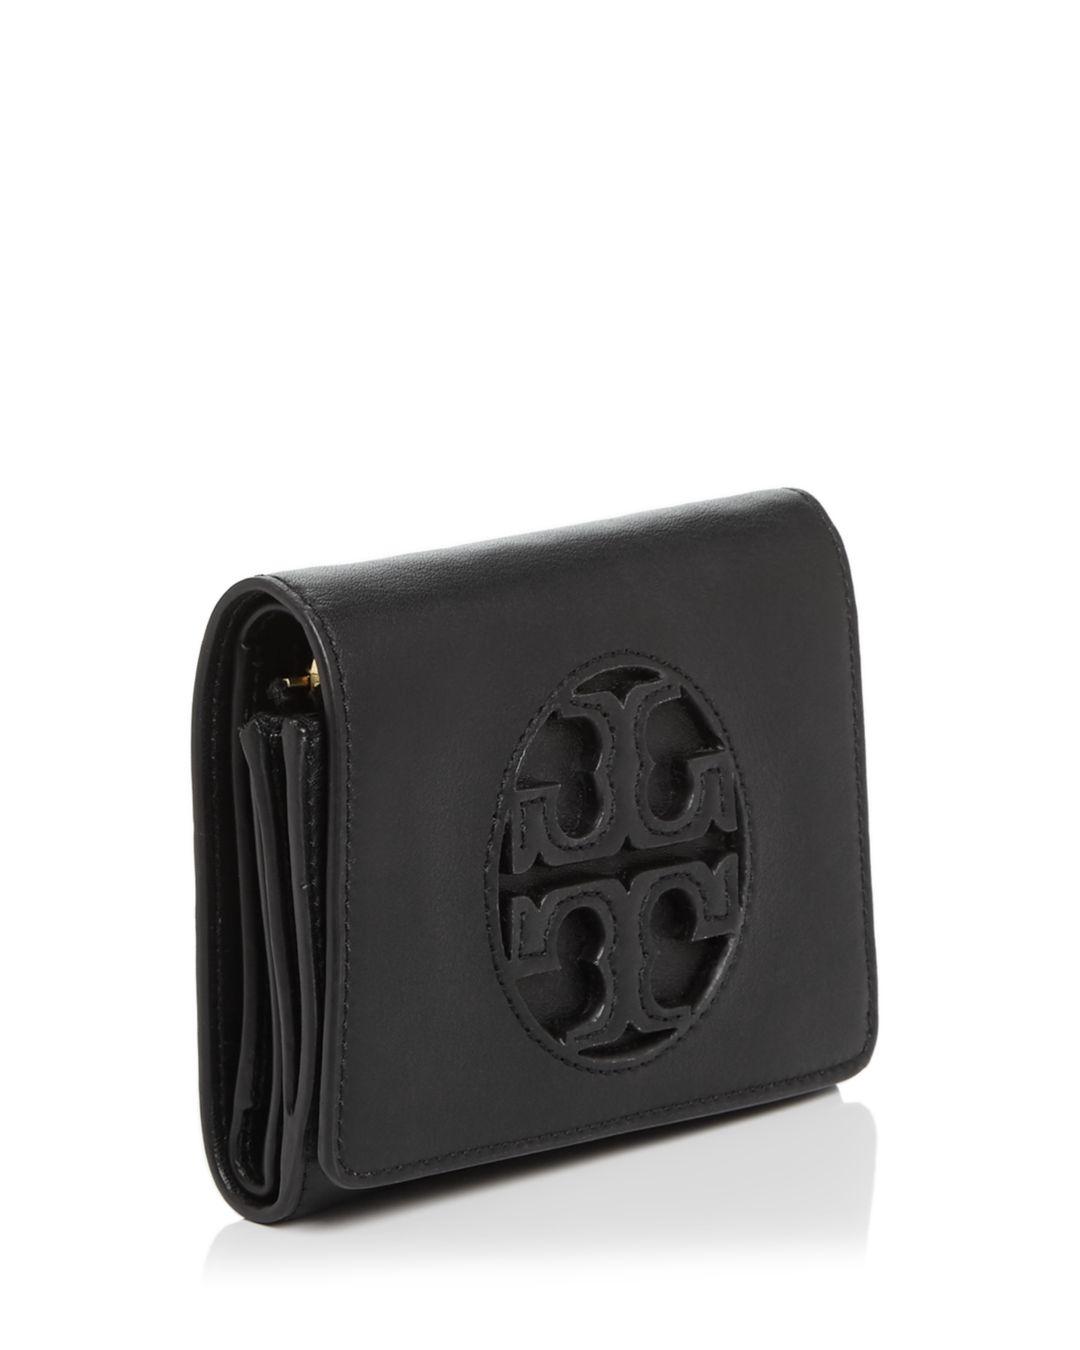 Tory Burch Leather Miller Medium Flap Wallet in Black/Gold (Black 